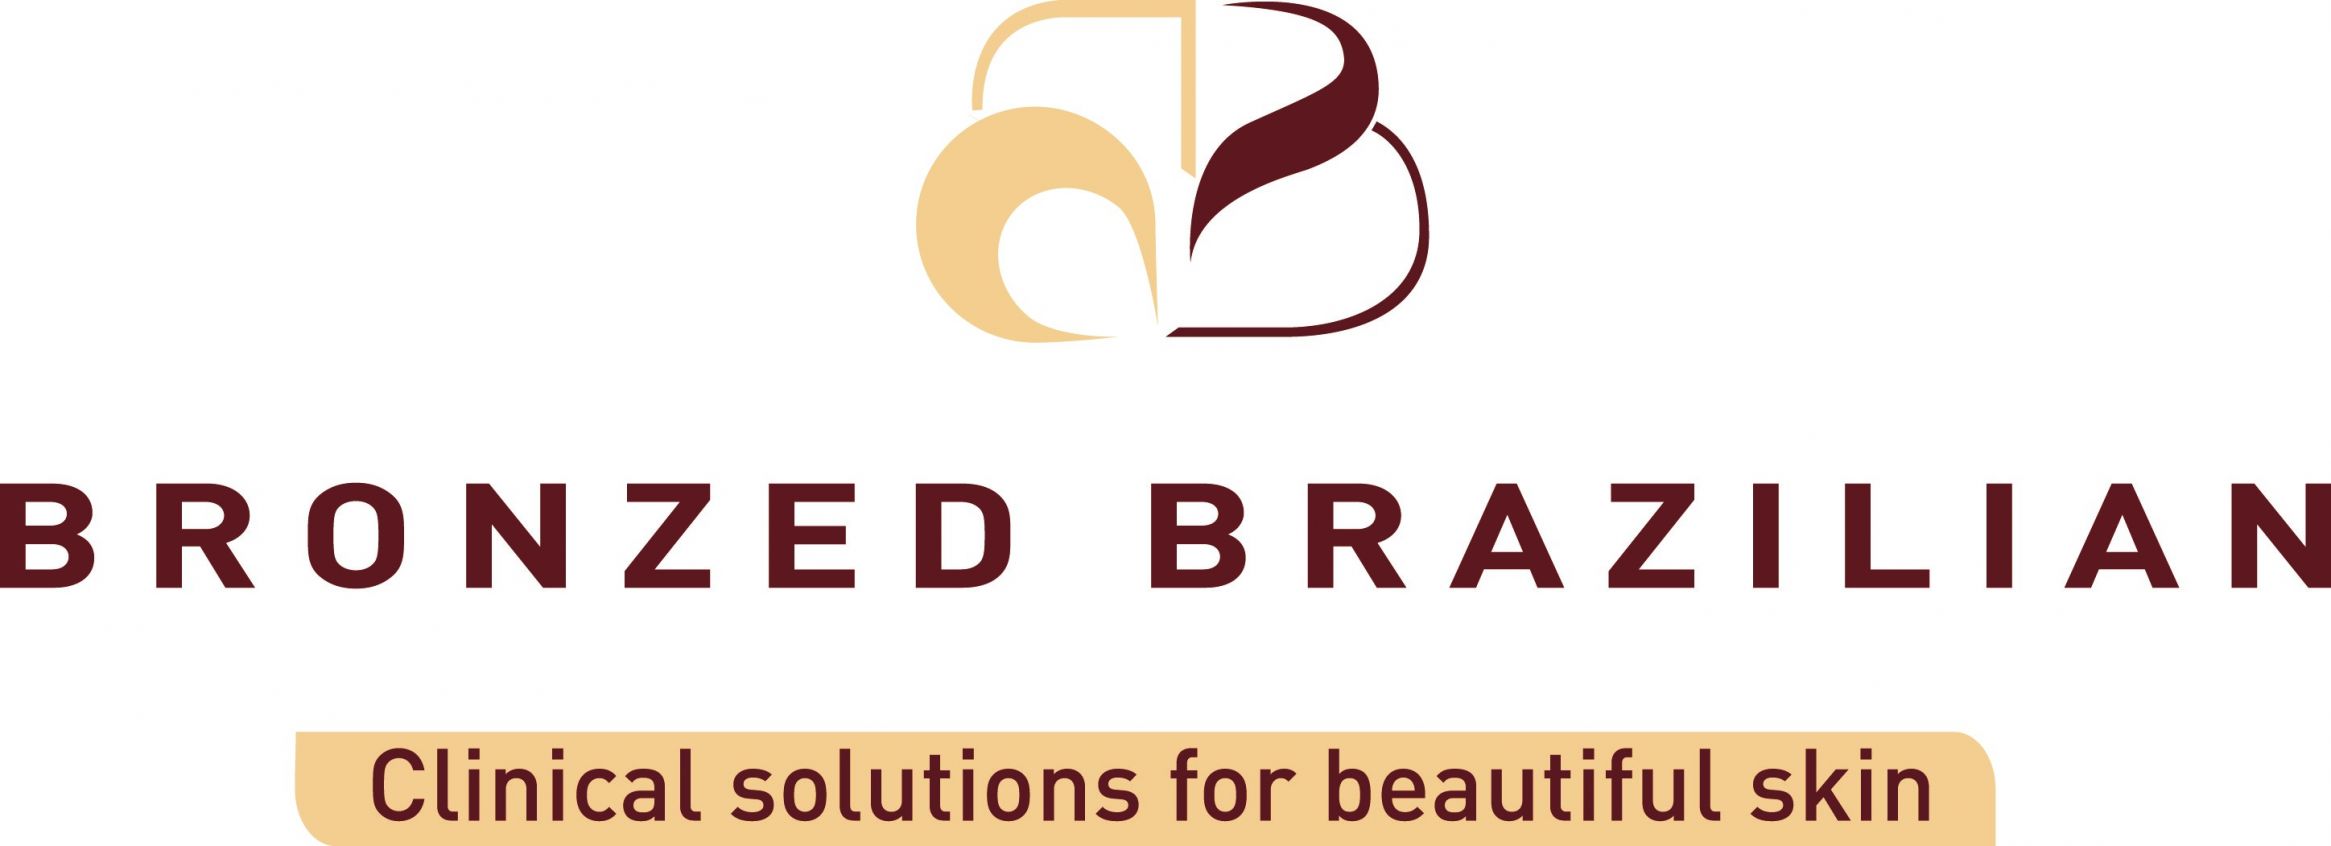 Bronzedbrazilian Logo